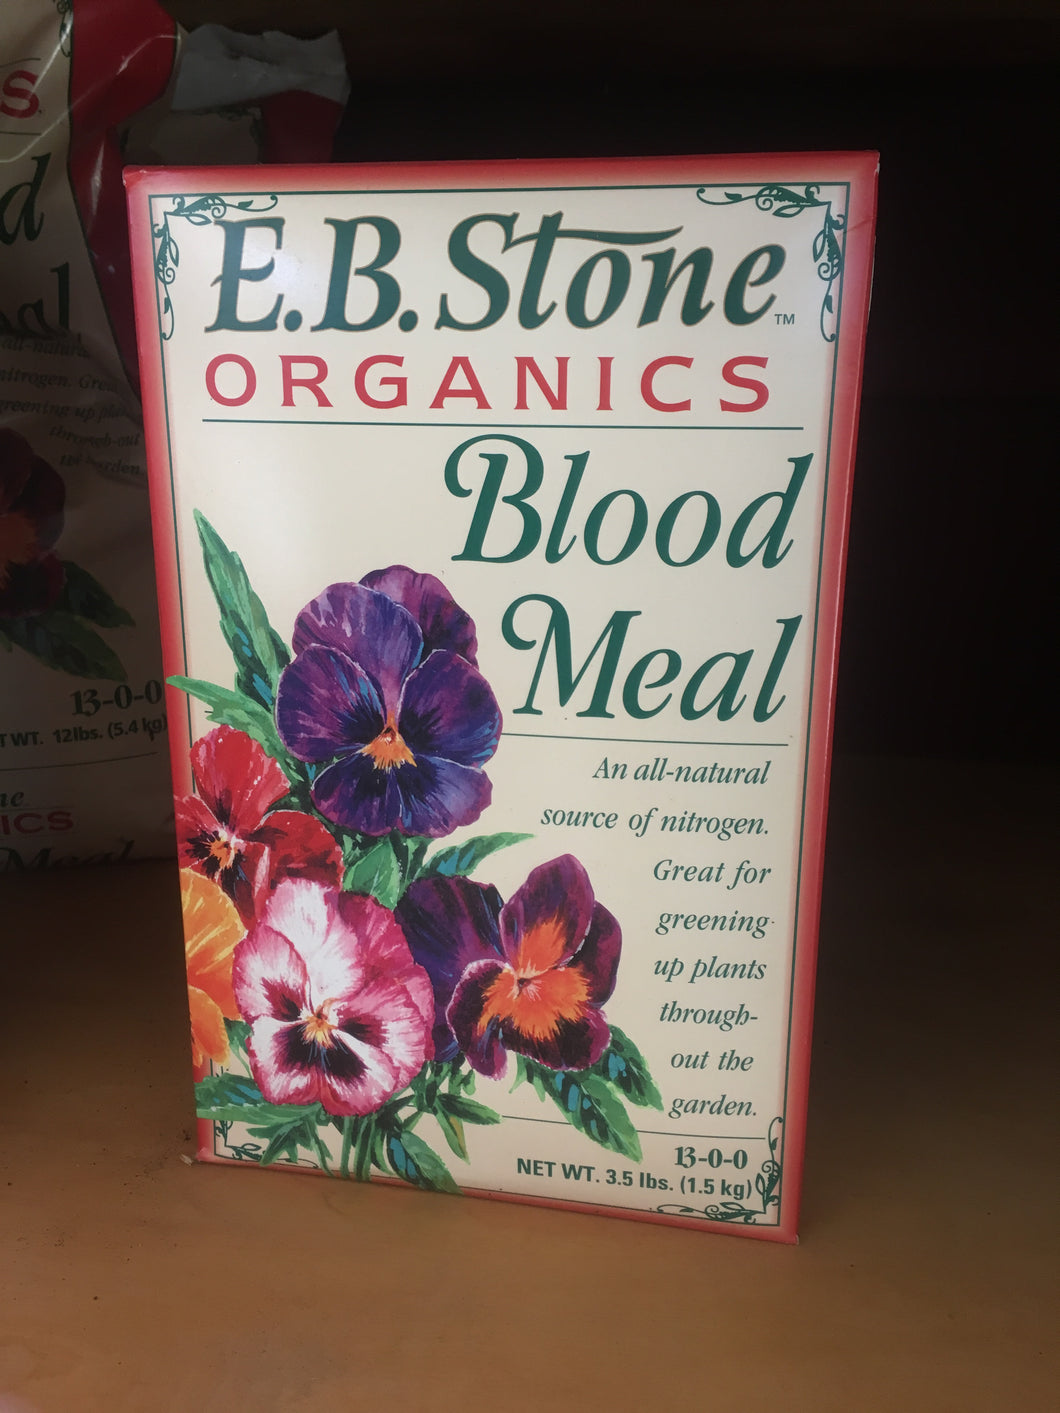 E.B. Stone Organics Blood Meal